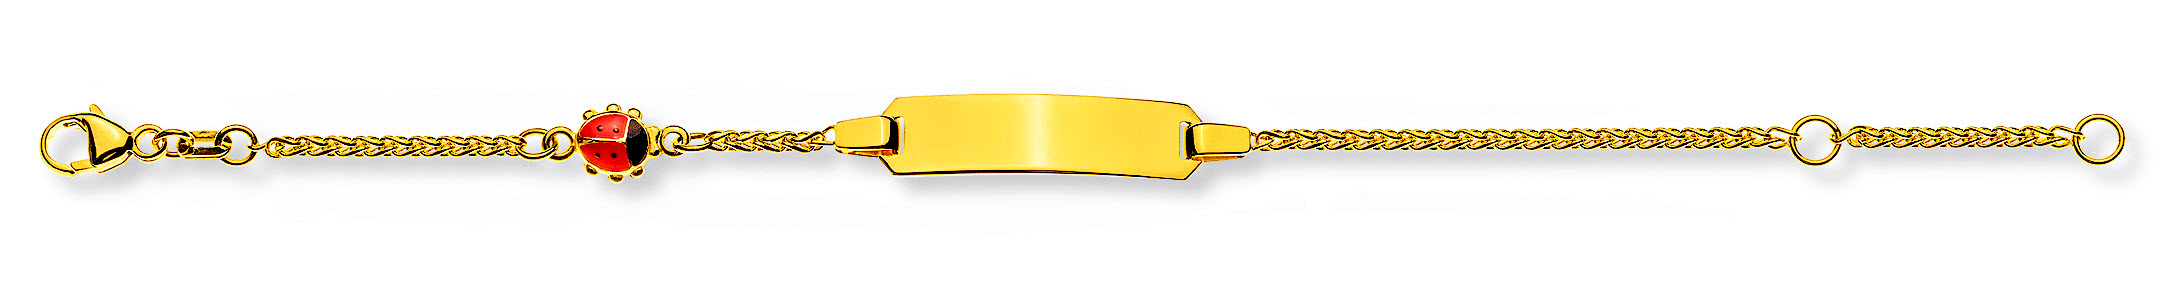 Bébé Bracelet Zopf Gelbgold 375, 14cm, mit